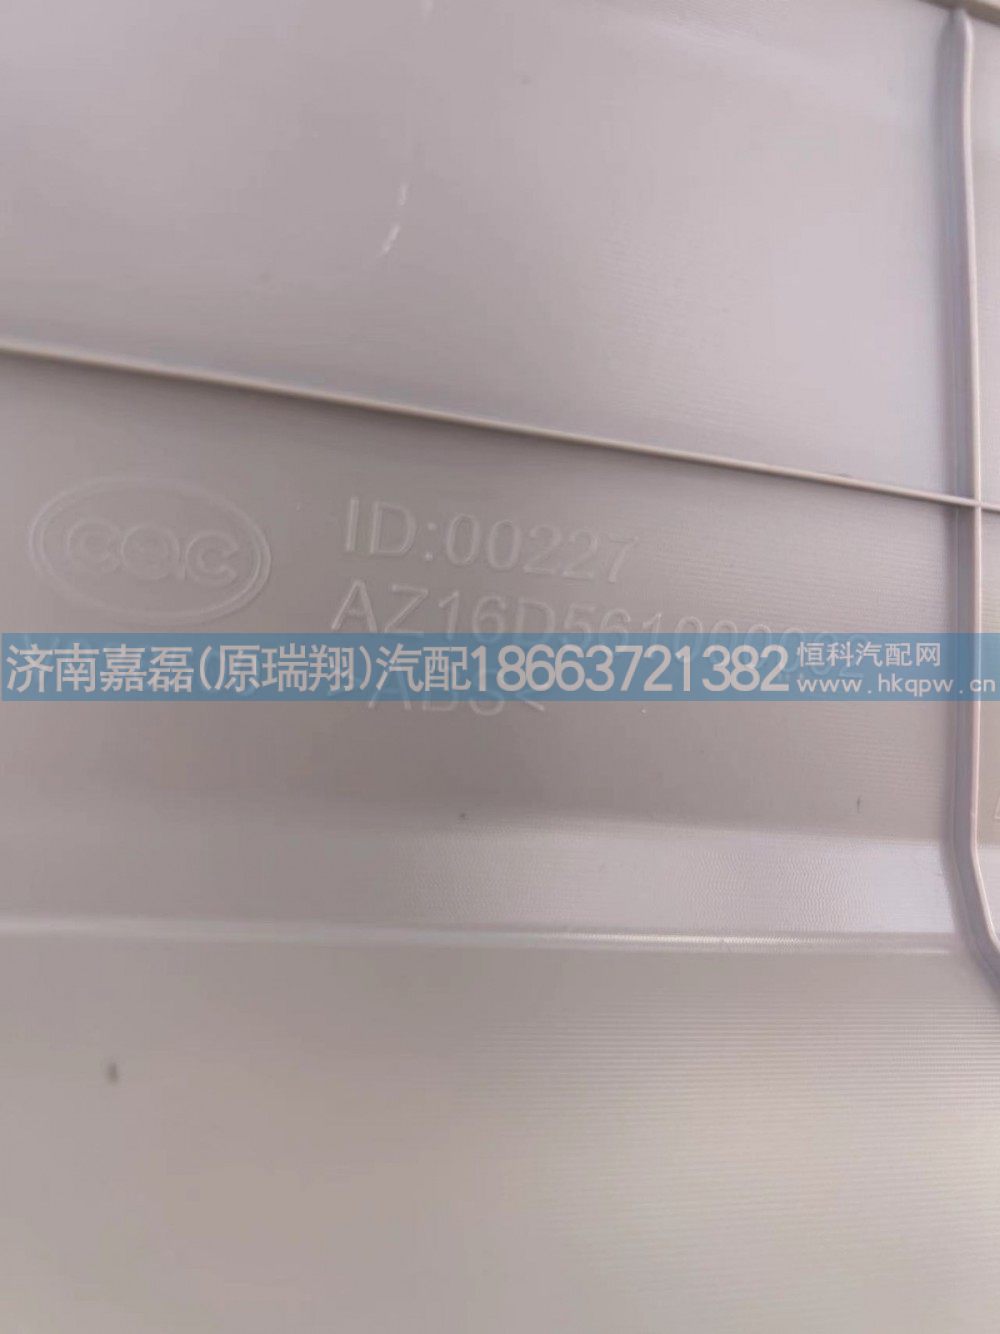 AZ16D561000002,右侧卧铺帘盒（提升版）,济南嘉磊汽车配件有限公司(原济南瑞翔)